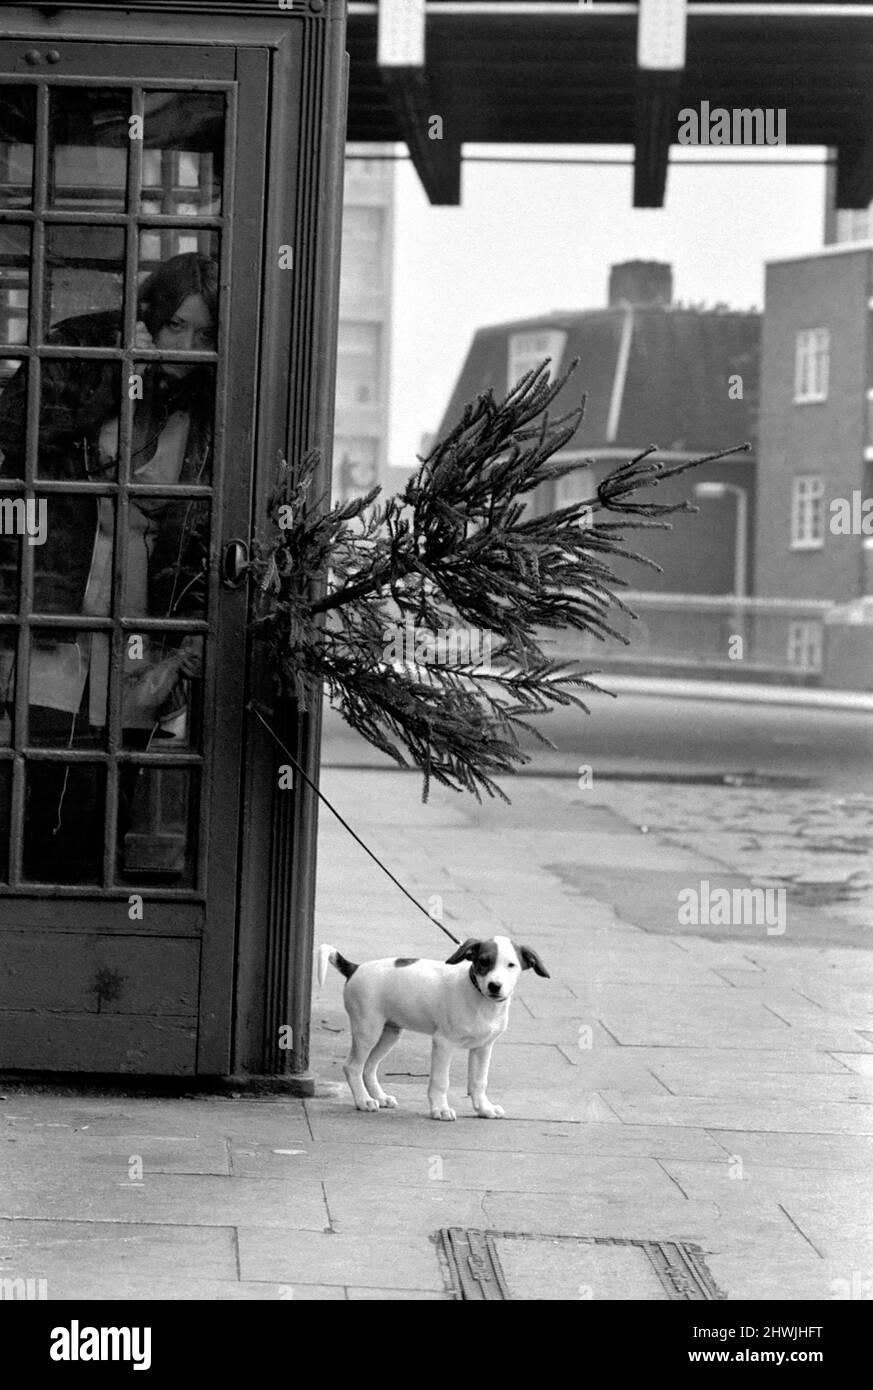 Animal, Cute: Puppy Dog outside Telephone Box. December 1972 72-11831-003 Stock Photo